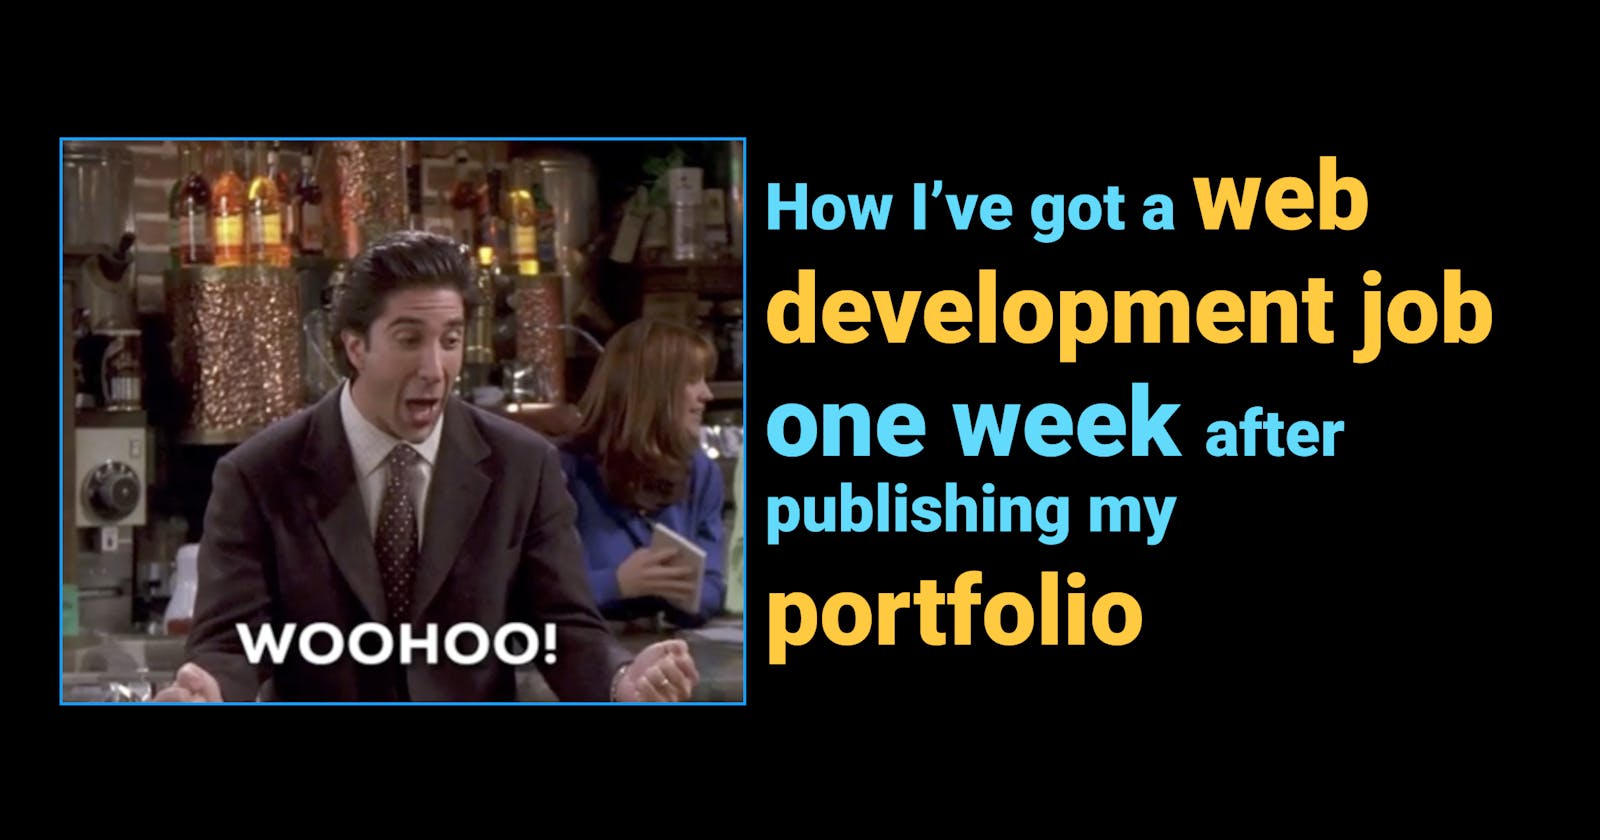 How I’ve got a web development job one week after publishing my portfolio